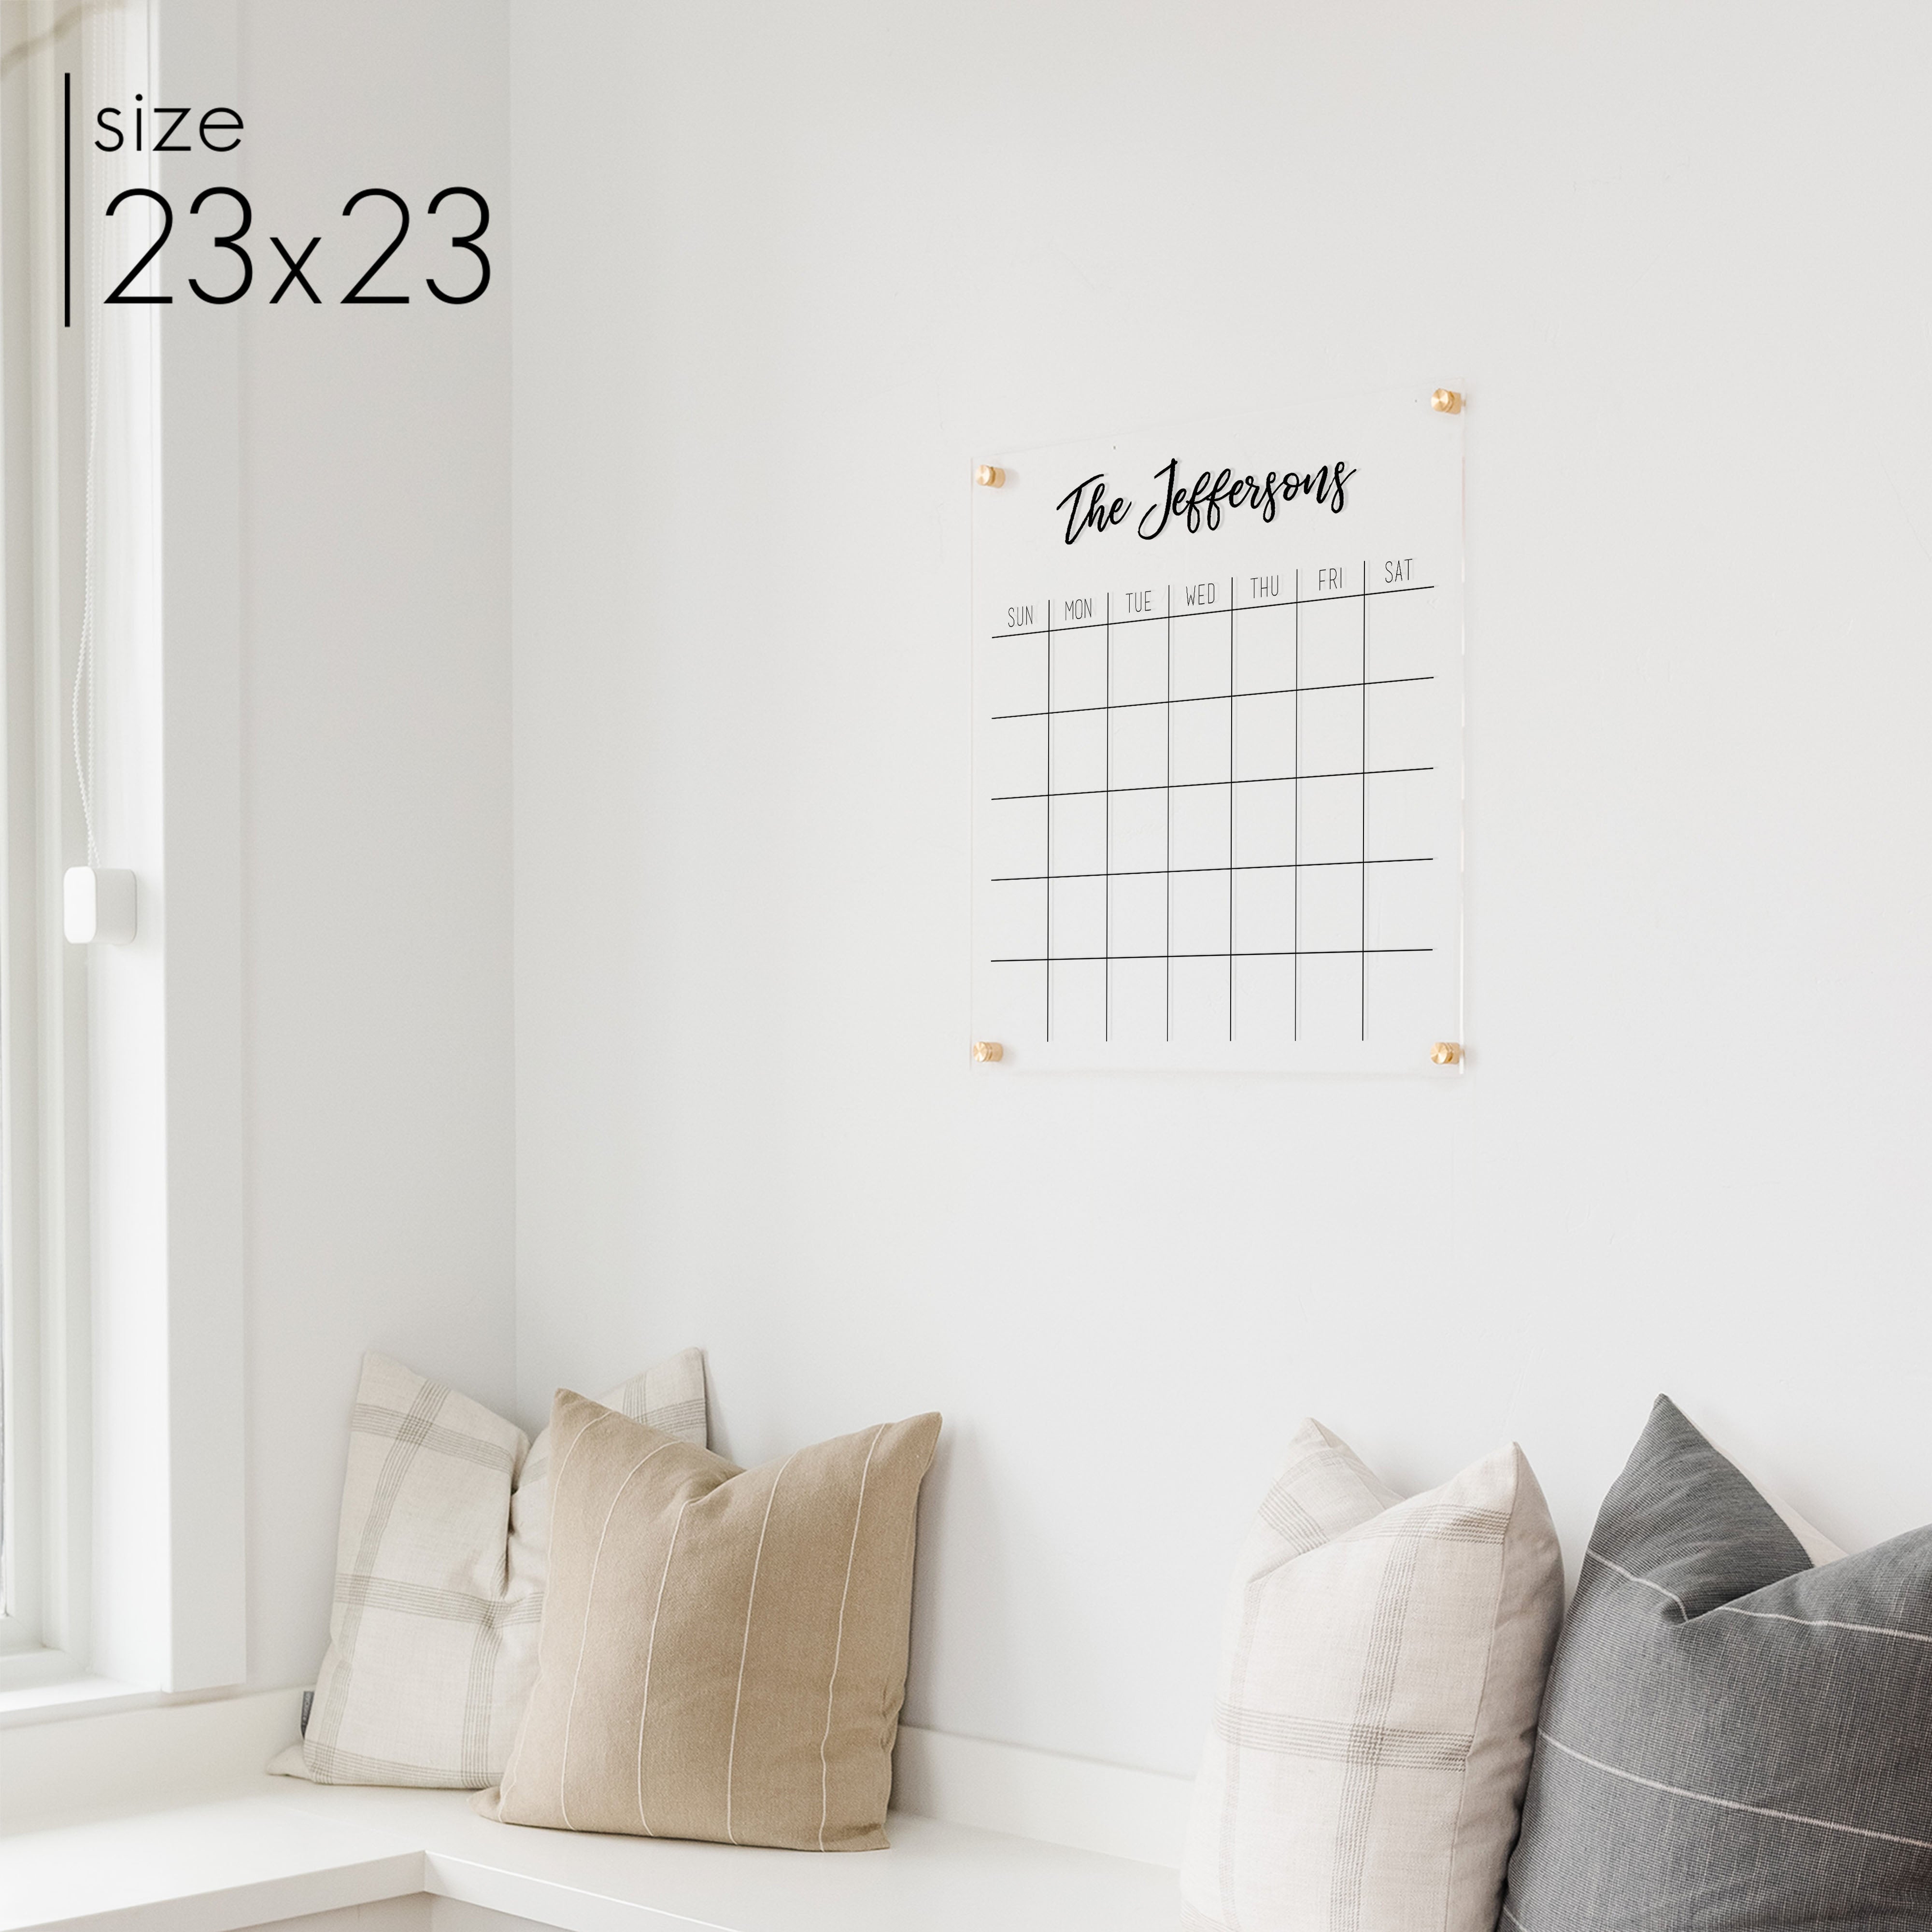 Monthly Acrylic Calendar | Vertical Traeger